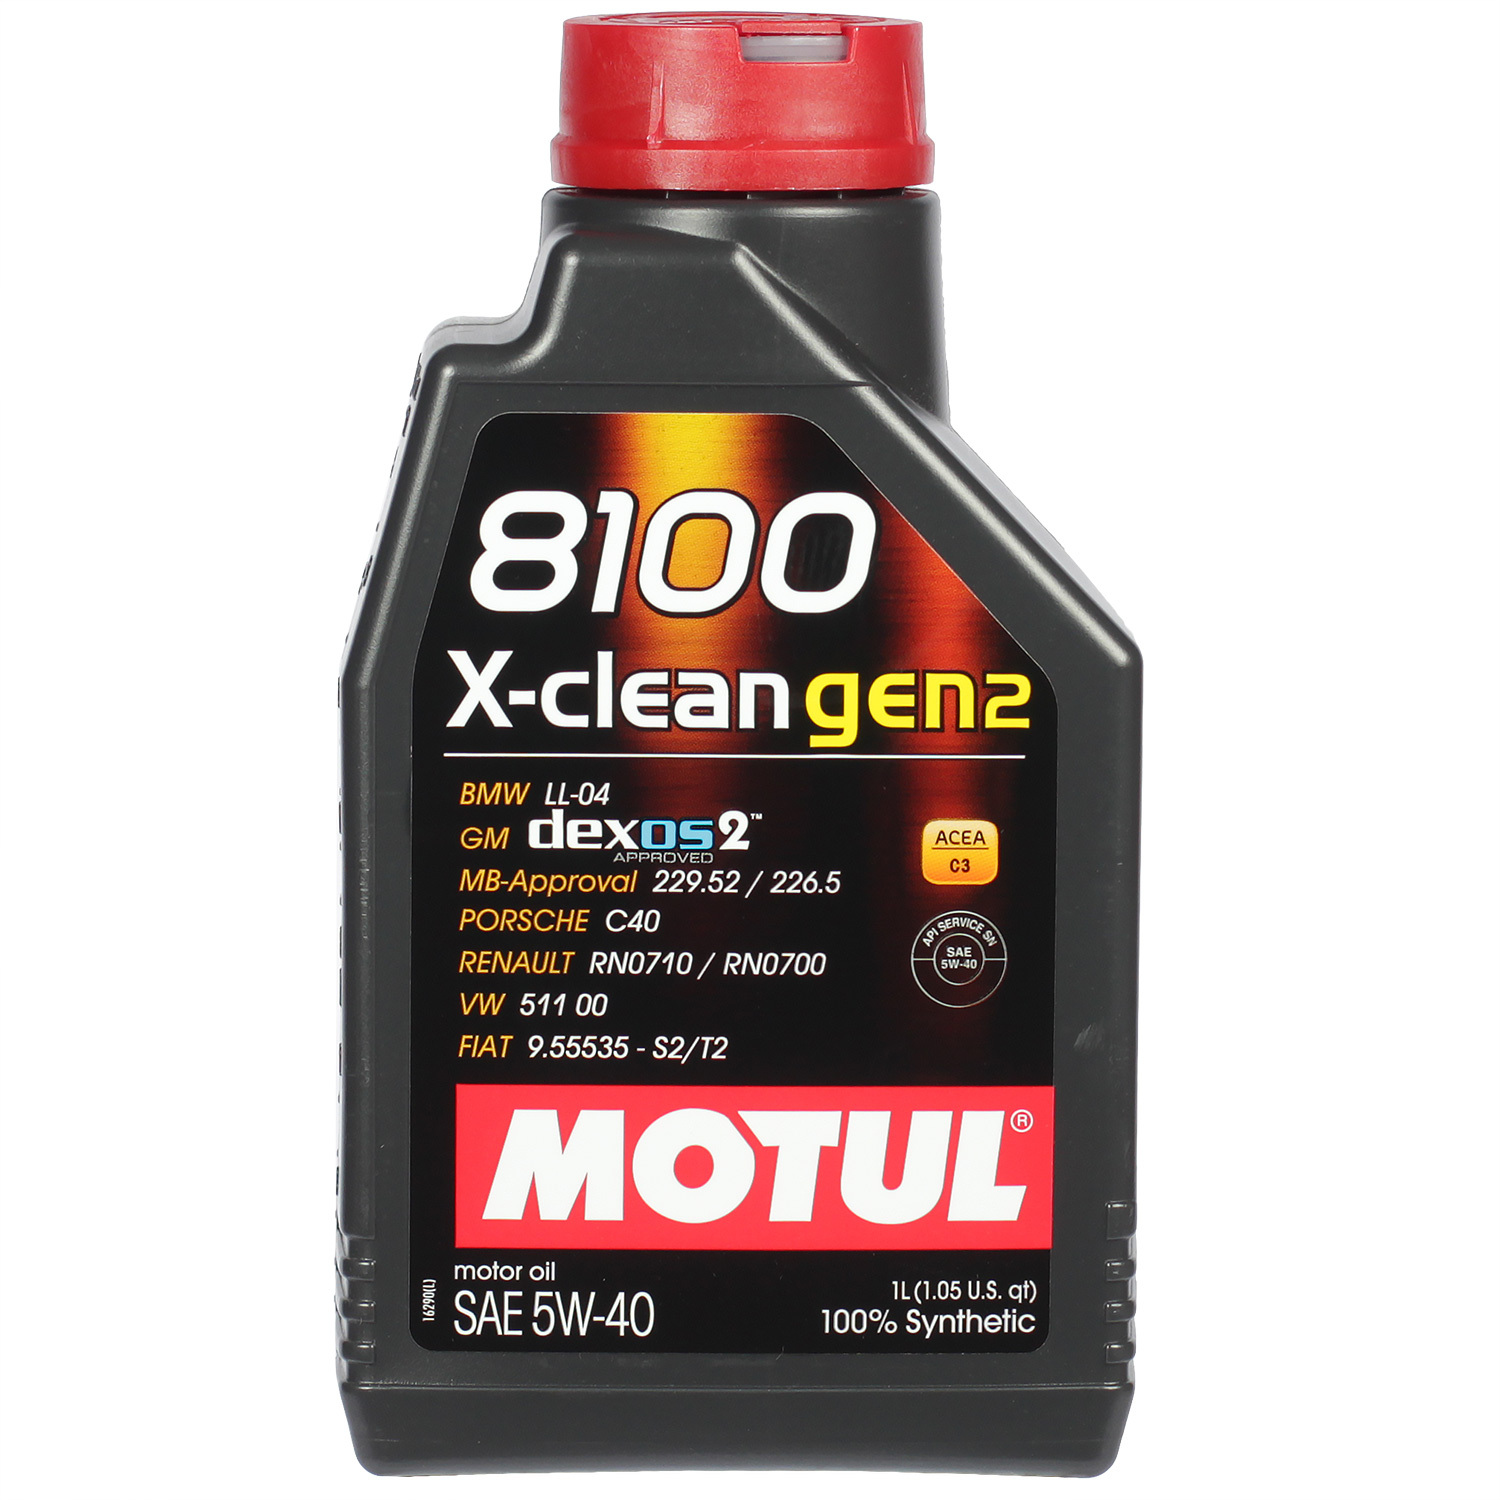 Motul Моторное масло Motul 8100 X-clean gen2 5W-40, 1 л масло моторное motul 8100 eco clean 0w 20 1 л 108813